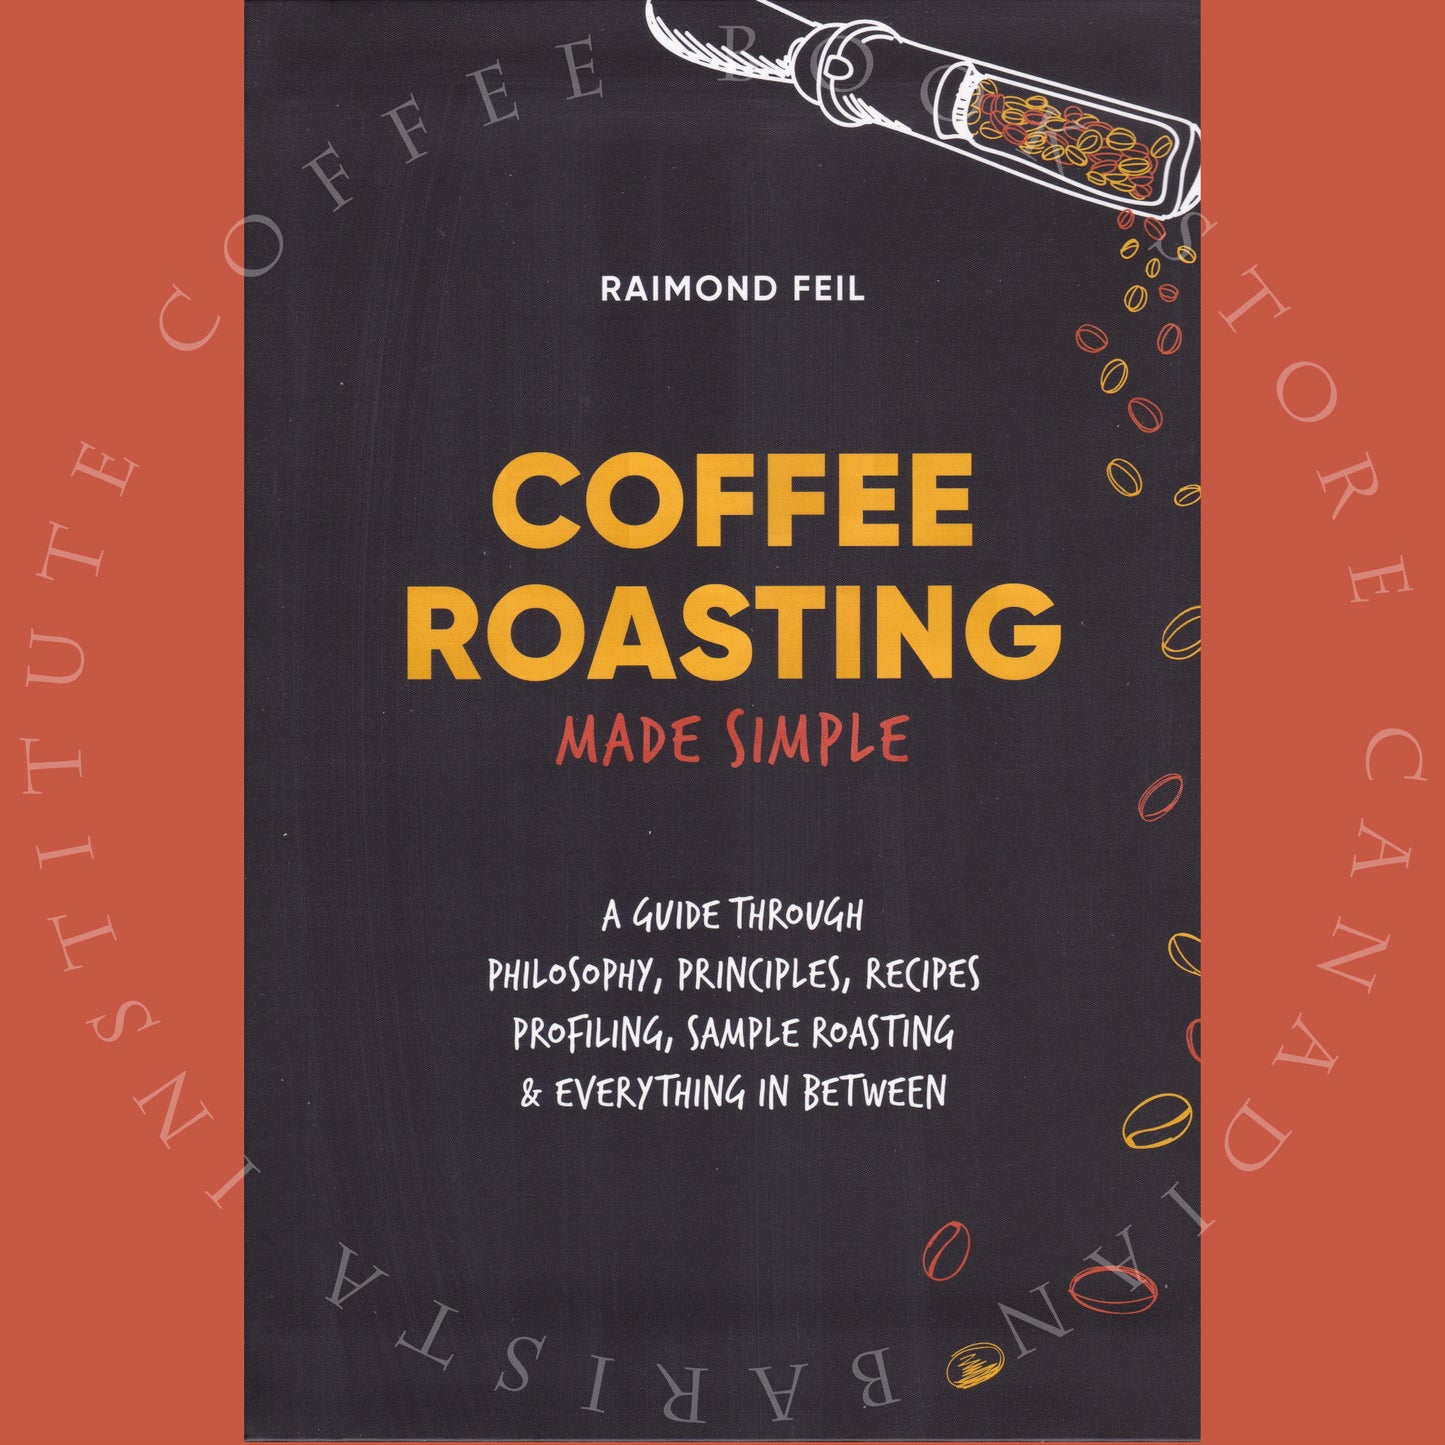 Coffee Roasting Made Simple by Raimond Feil